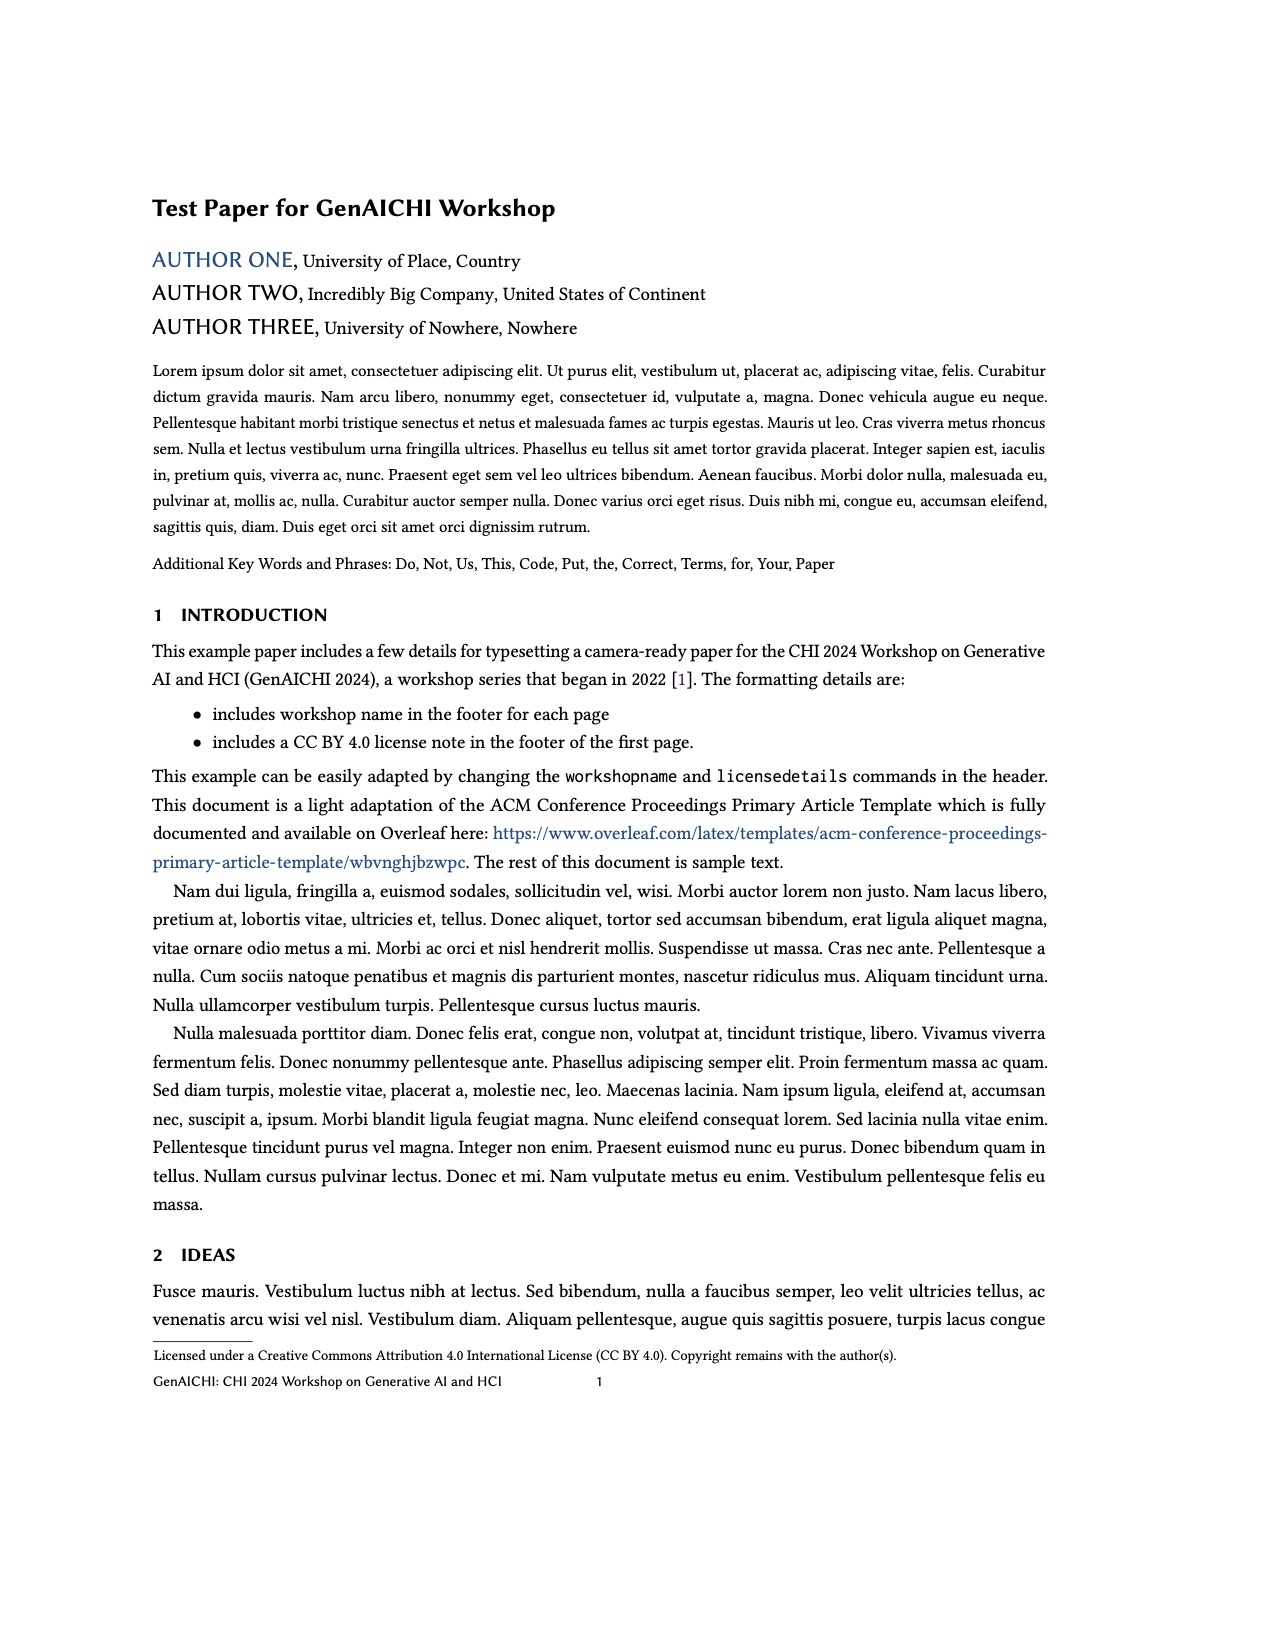 Example GenAICHI workshop paper